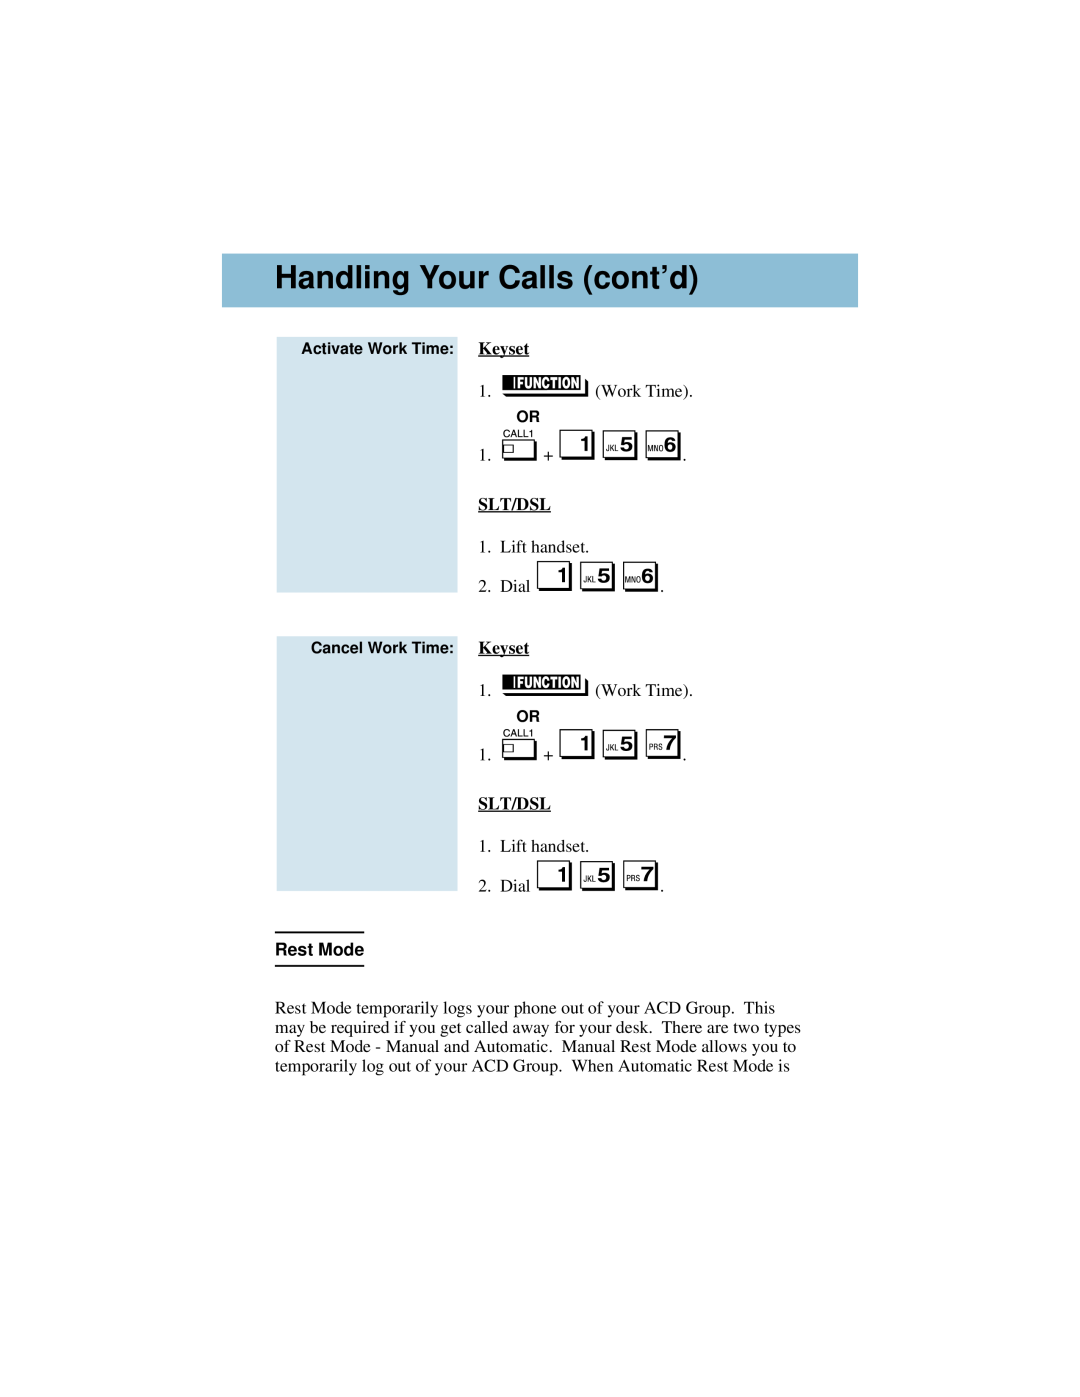 NEC i-Series manual Handling Your Calls cont’d, Slt/Dsl, Rest Mode, Keyset 